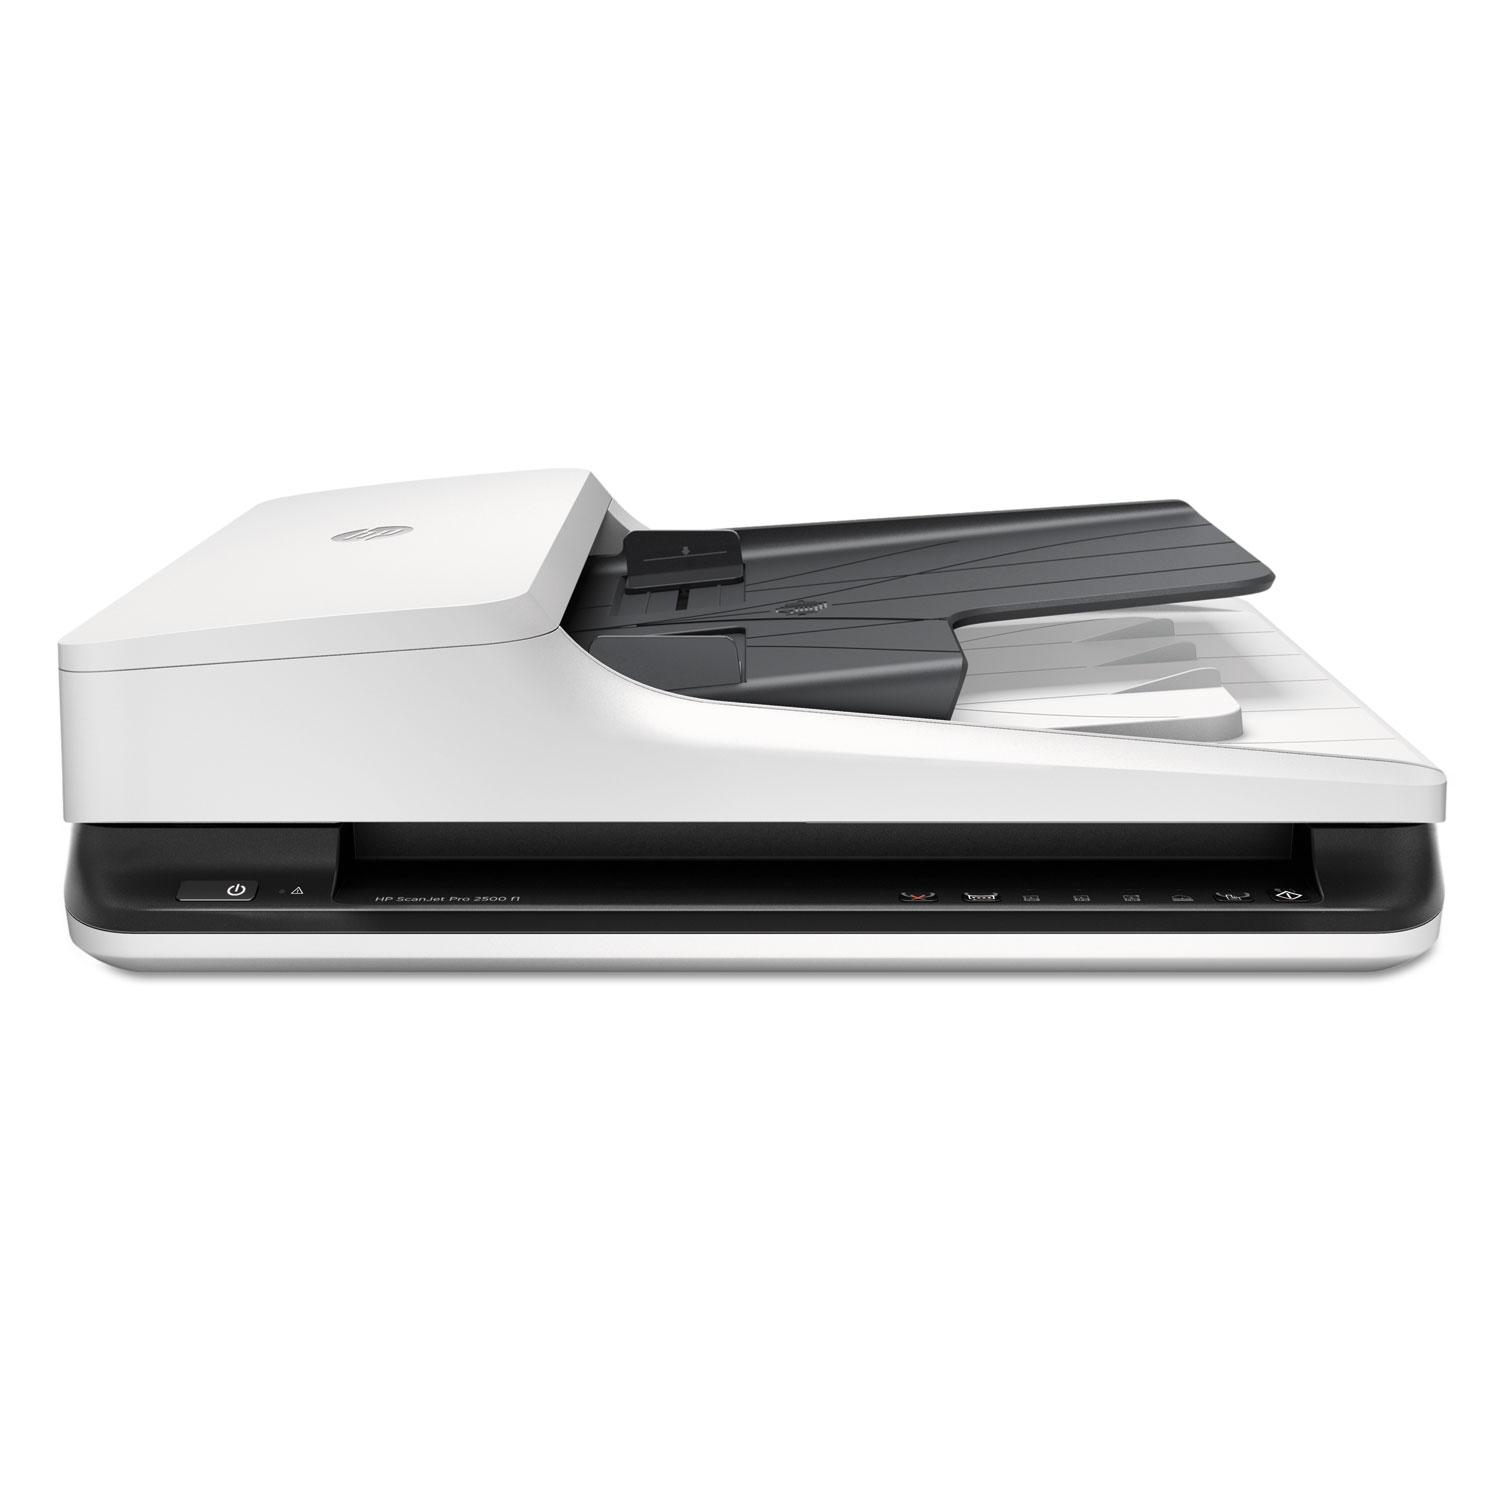  HP L2747A#BGJ Scanjet Pro 2500 f1 Flatbed Scanner, 1200 dpi Optical Resolution, 50-Sheet Duplex Auto Document Feeder (HEWL2747A) 